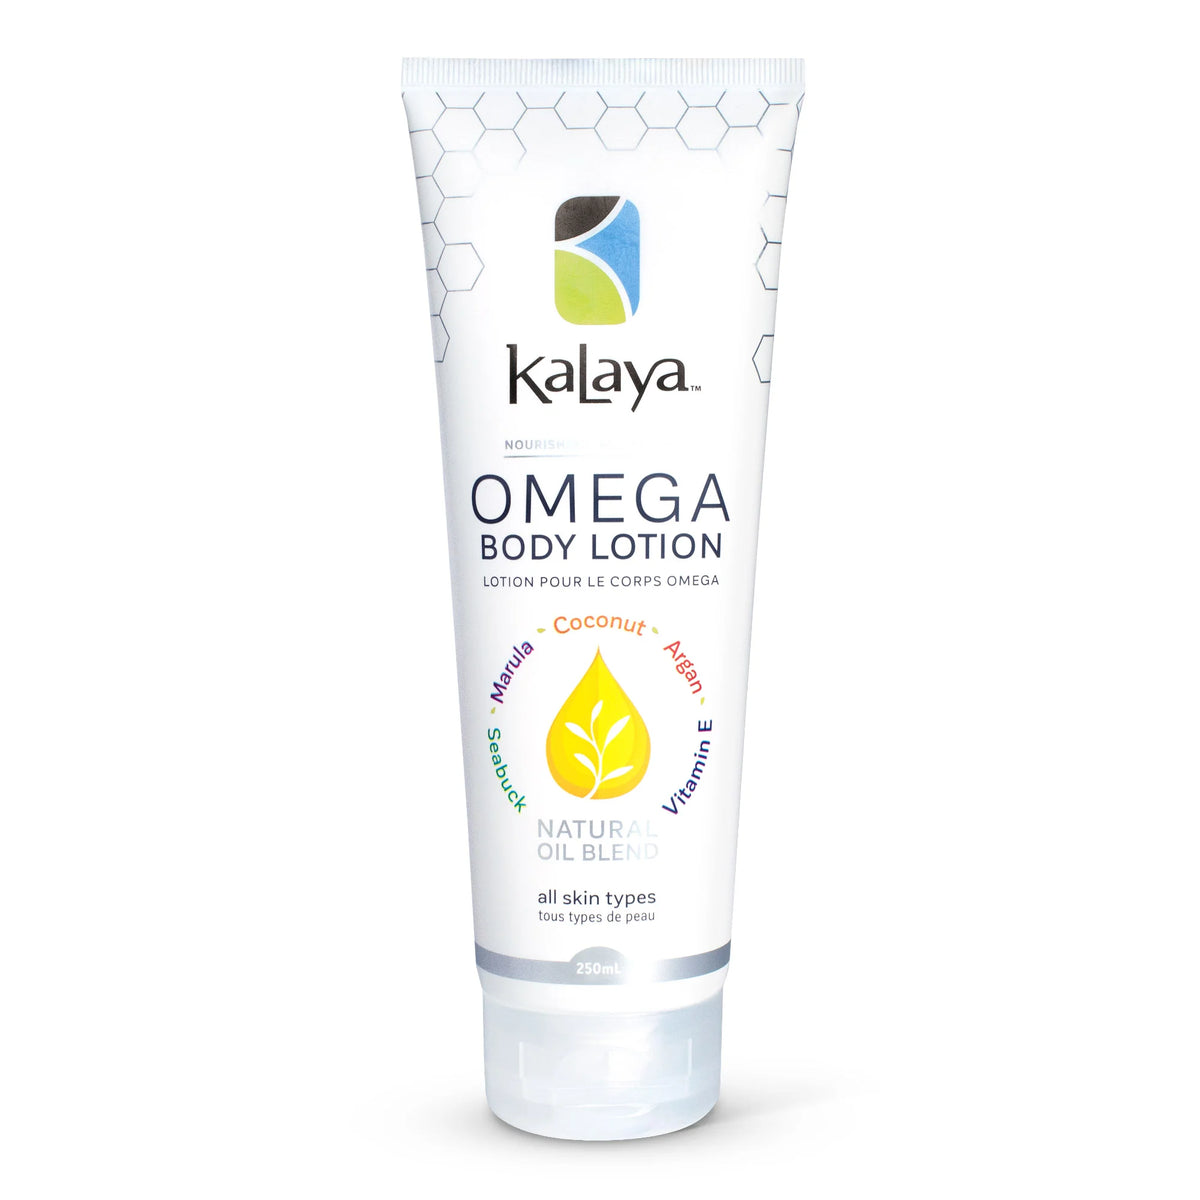 KaLaya Omega Body Lotion 8.4 fl oz (250mL)